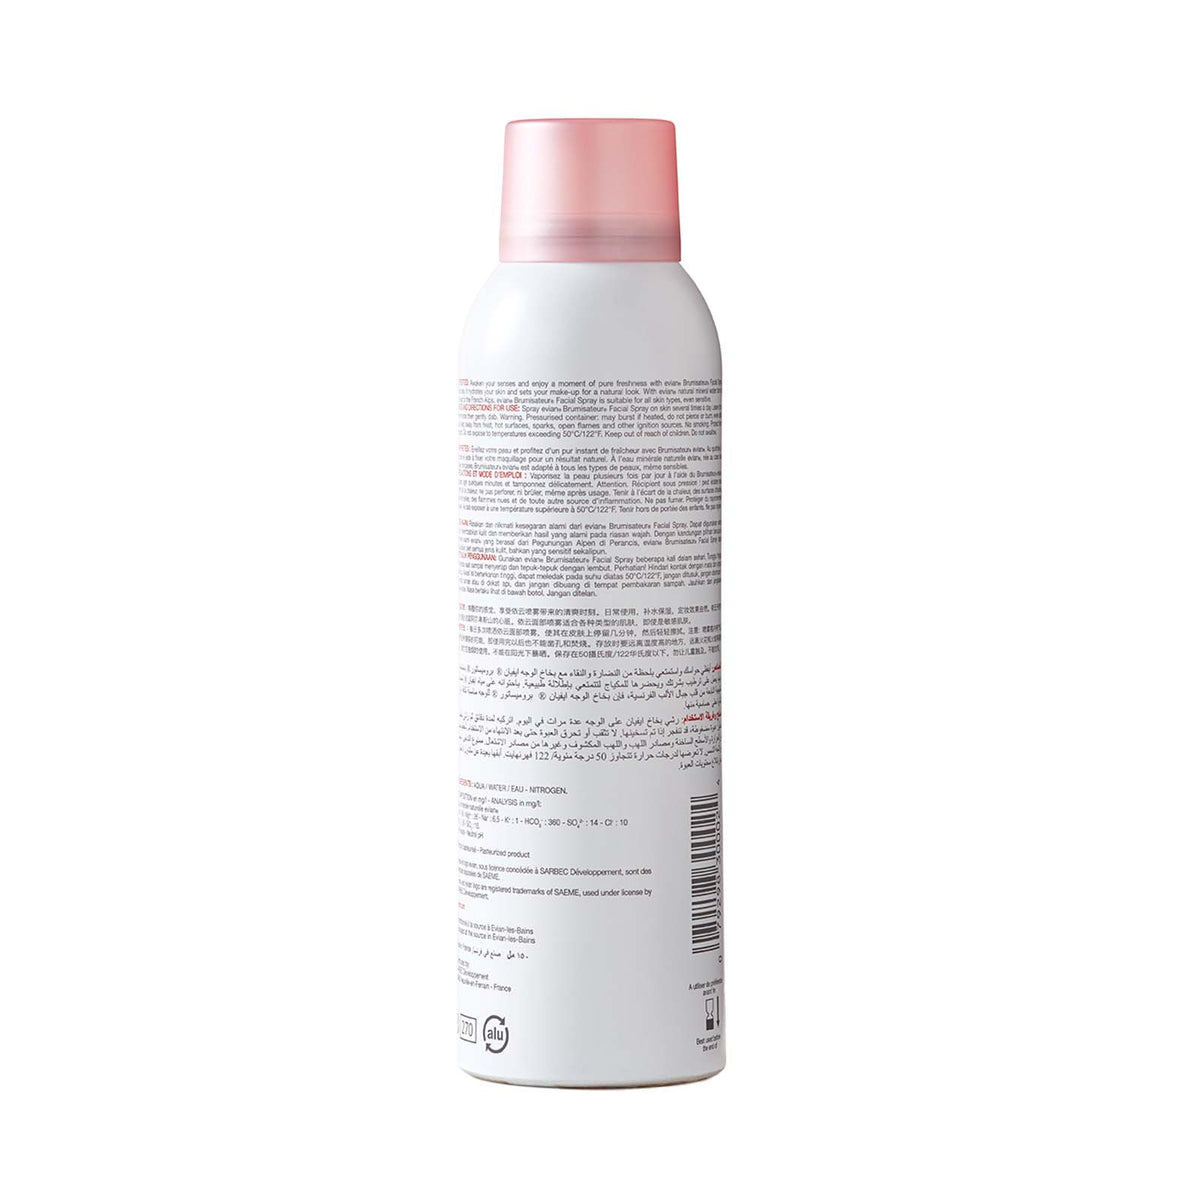 Evian Brumisateur® Facial Spray 150ml